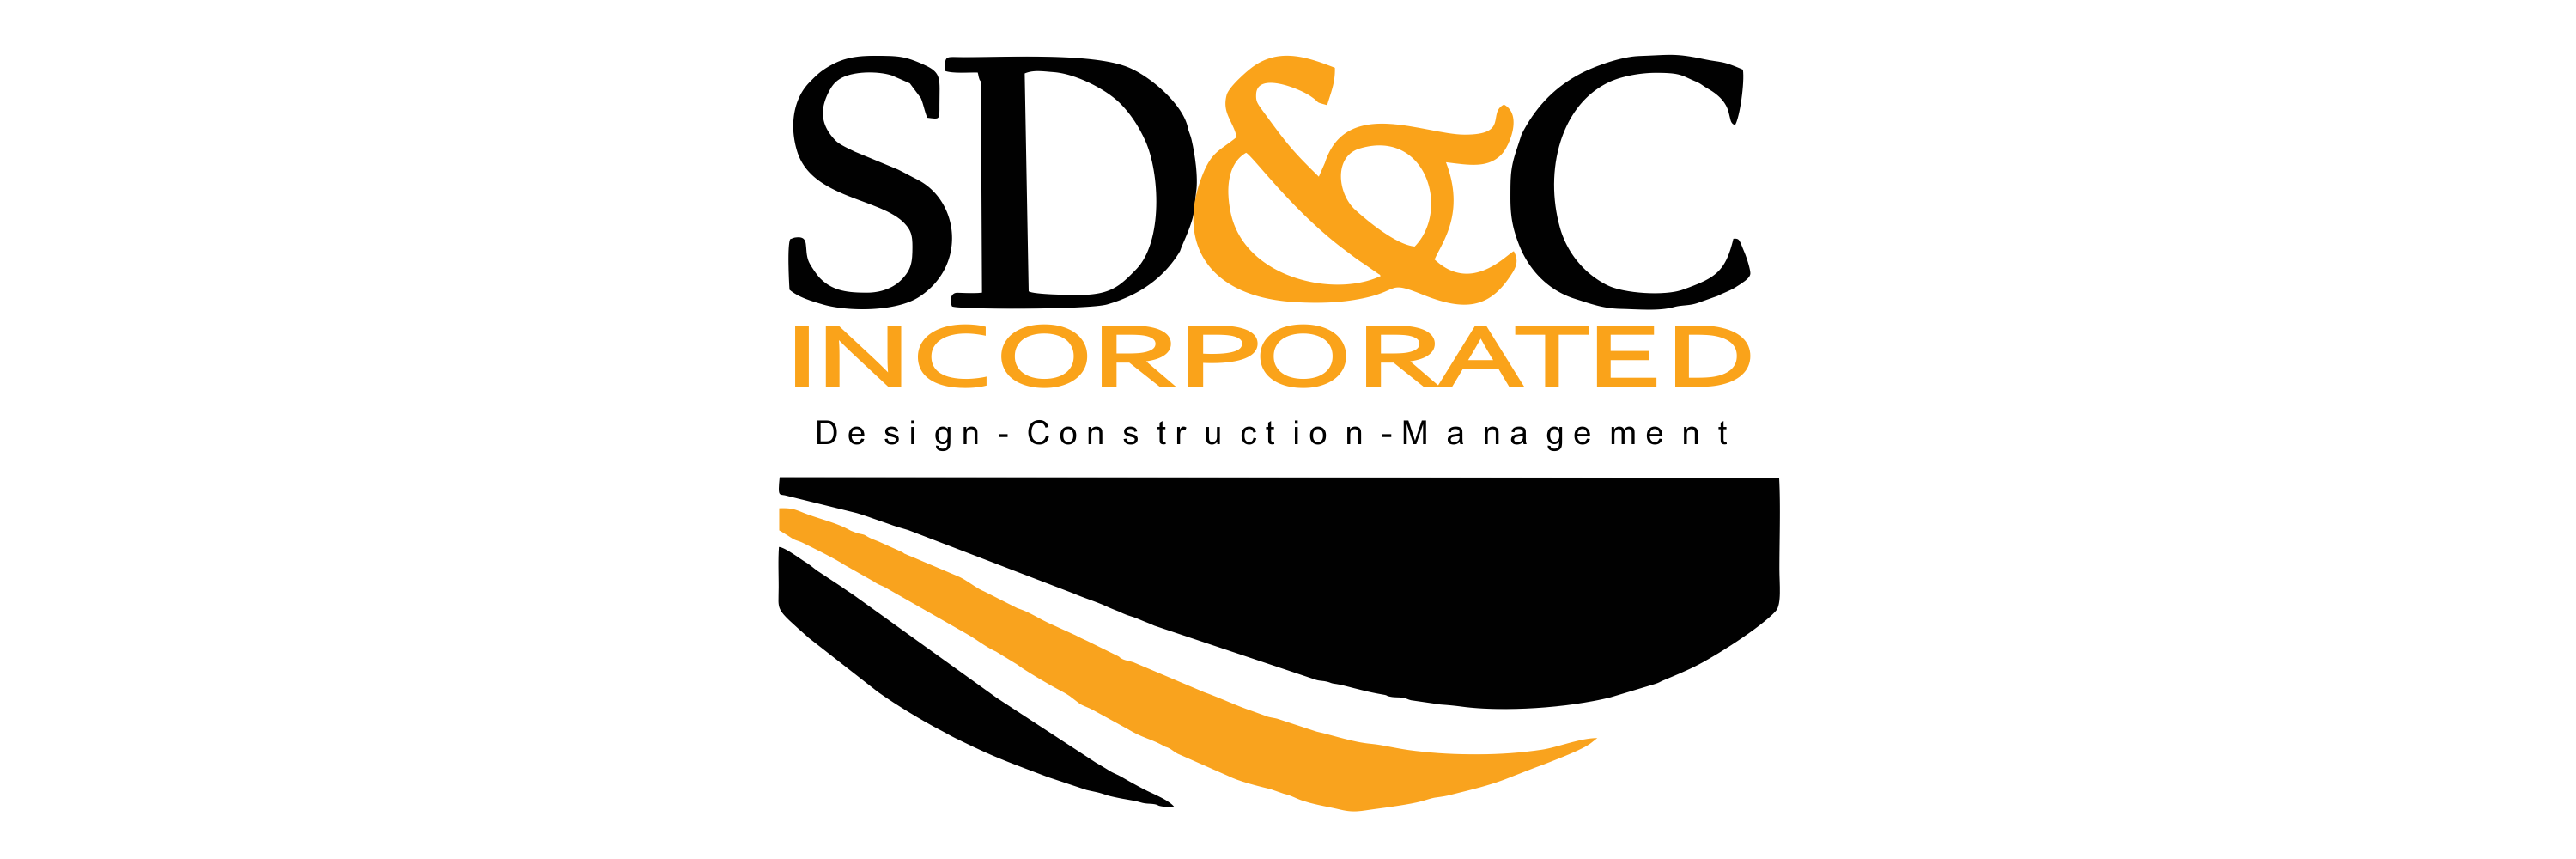 SD&C Construction Services